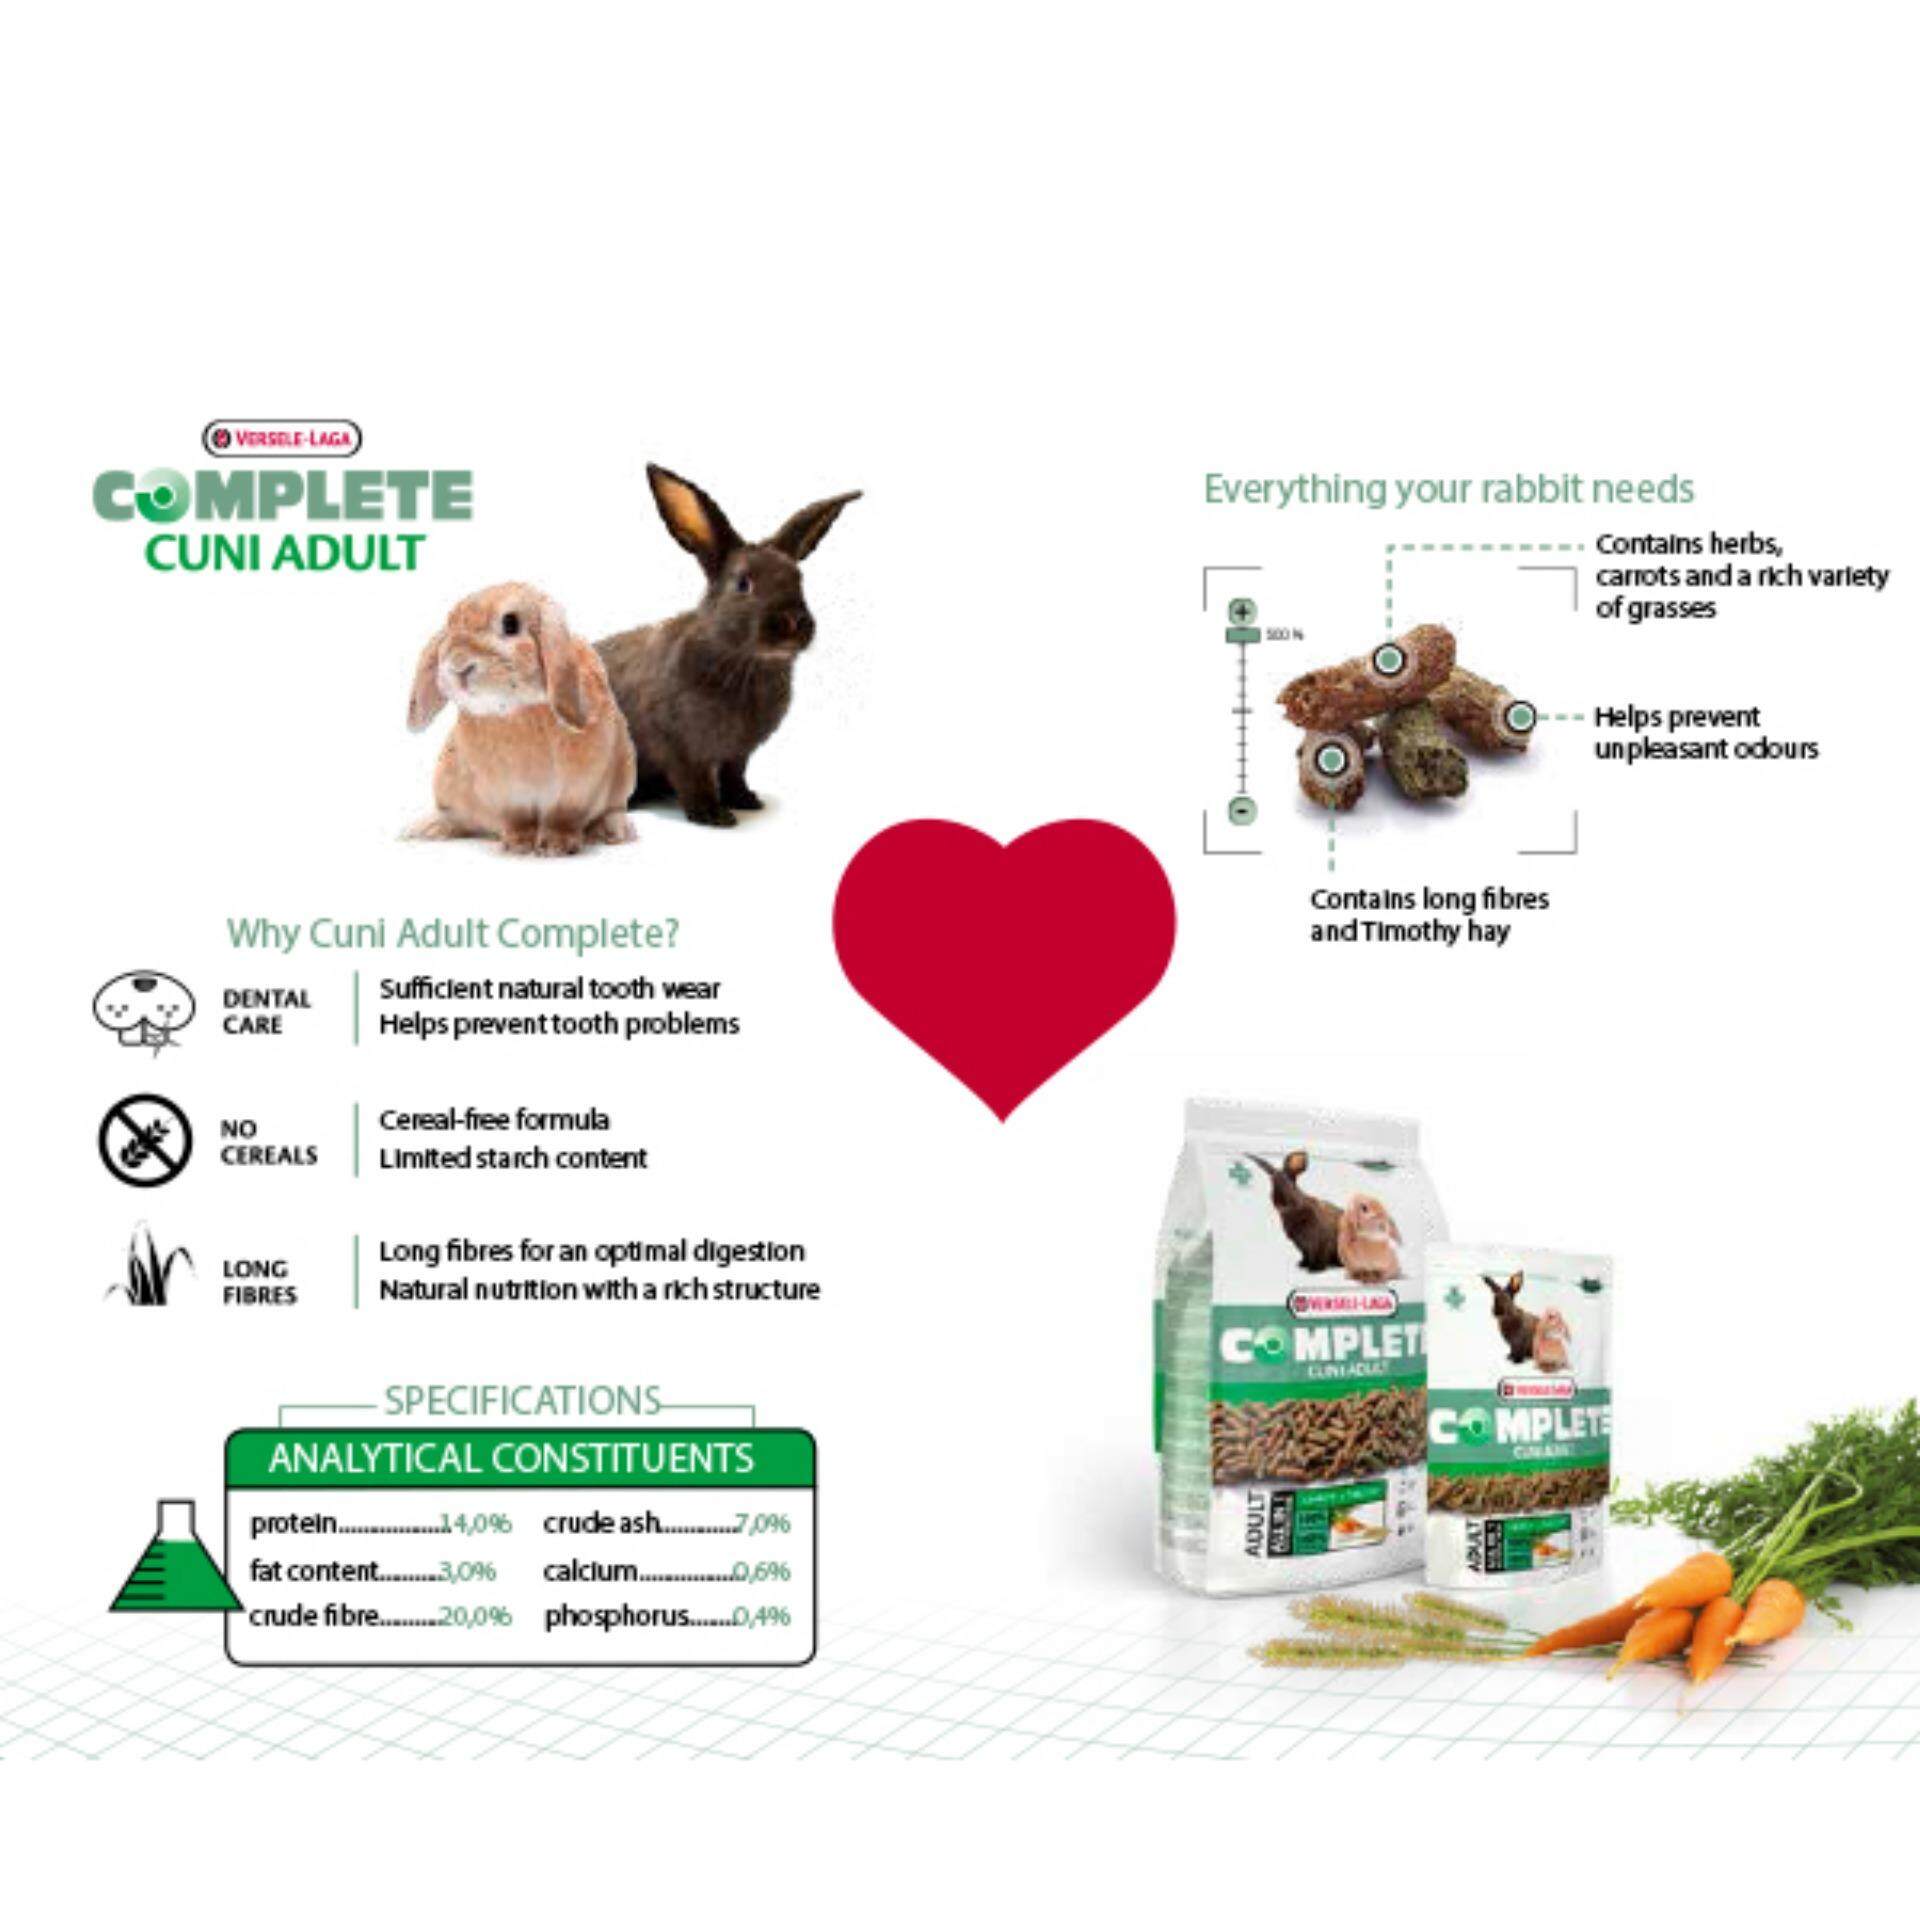 Cuni Complete Adult 500 g. อาหารกระต่าย อาหารอัดแท่ง สูตรแครอทและหญ้าทิโมธี สำหรับกระต่ายโต 6 เดือนขึ้นไป (500 กรัม/ถุง)